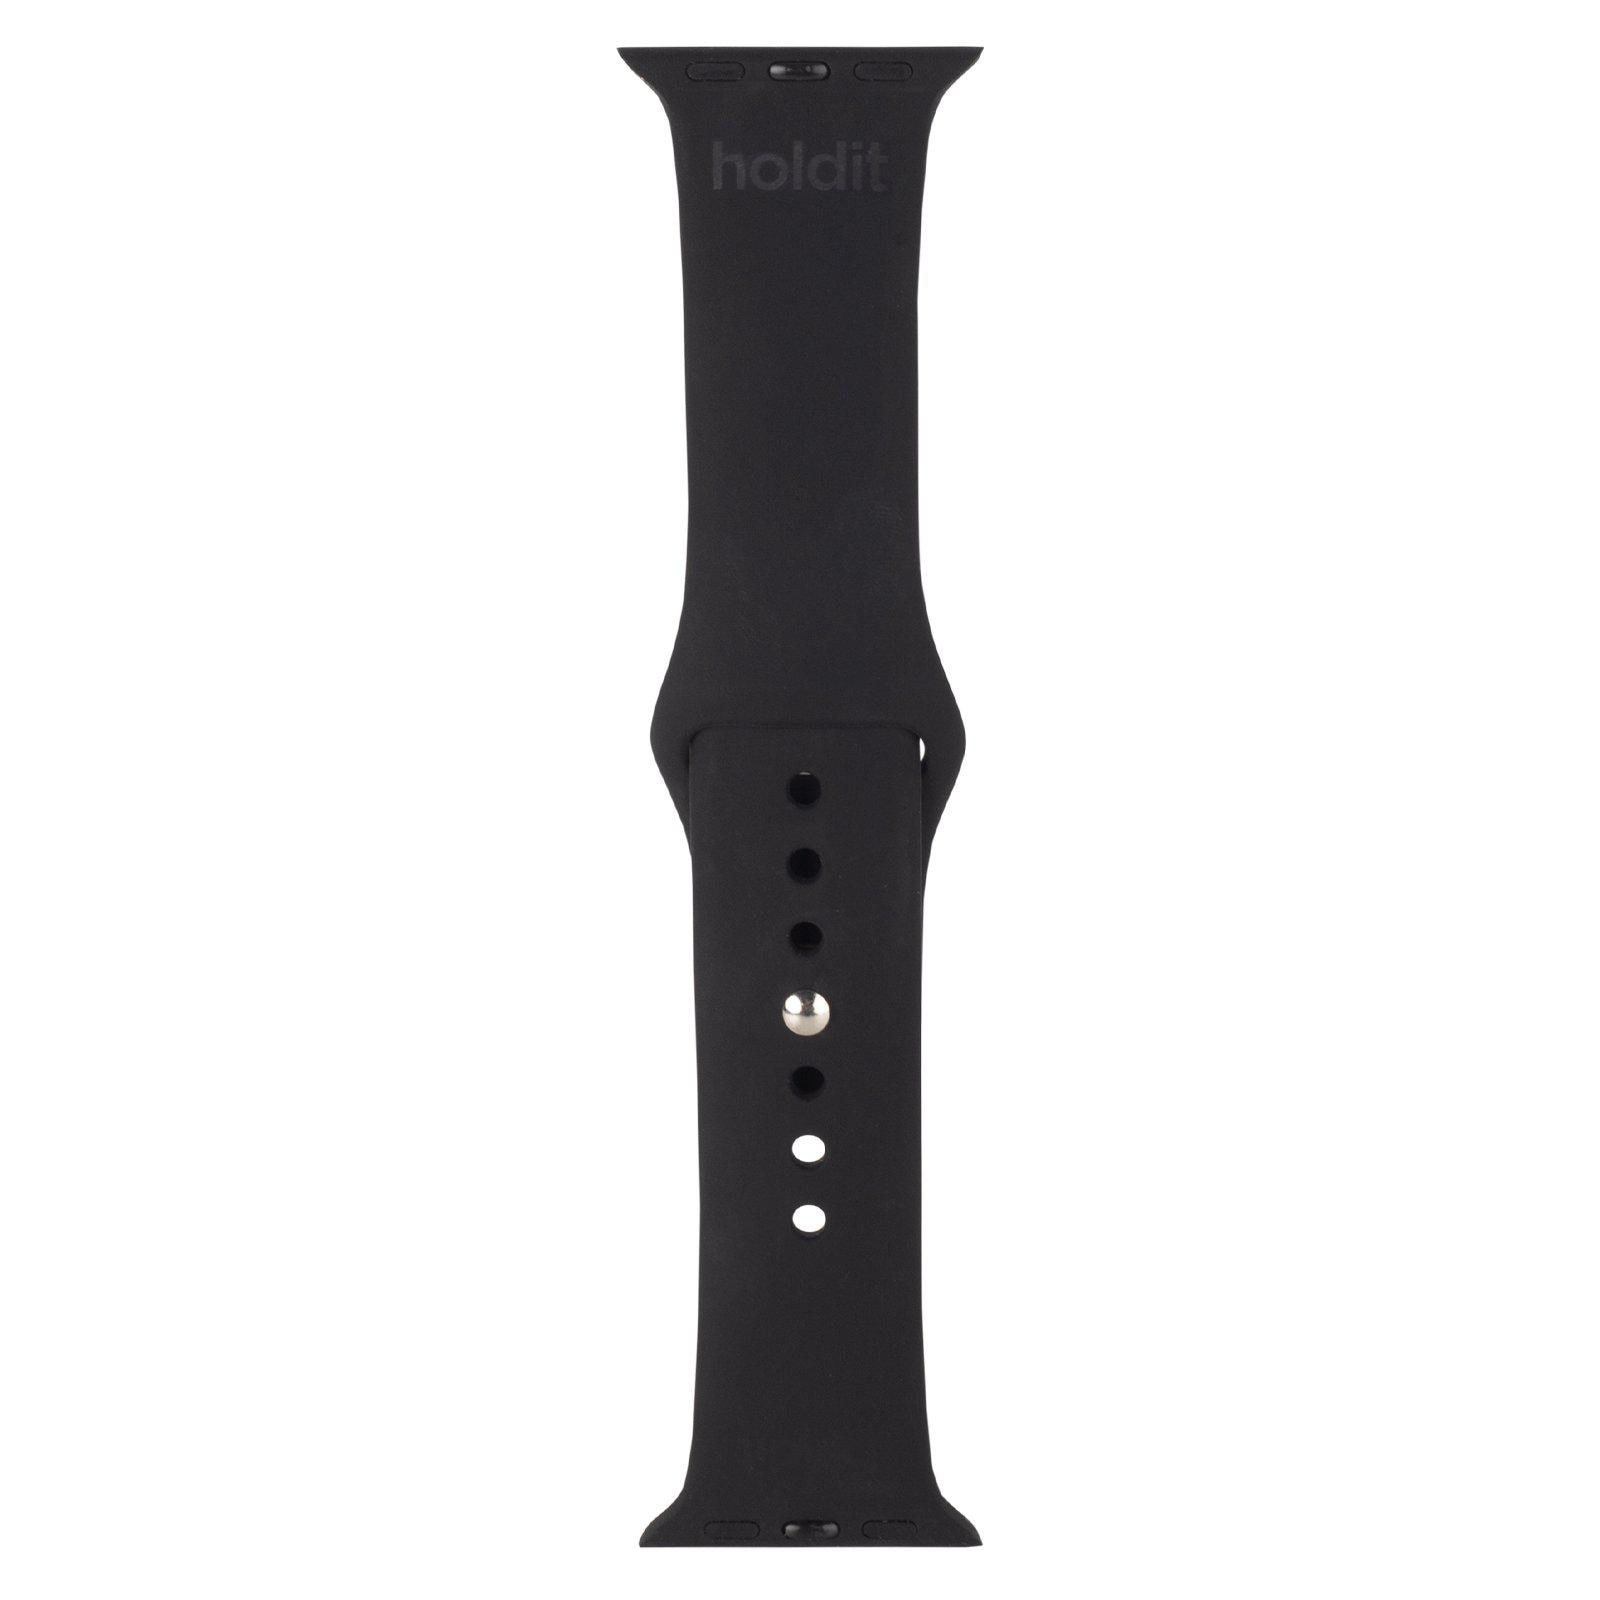 Bracelet en silicone Apple Watch 45mm Series 7, Black